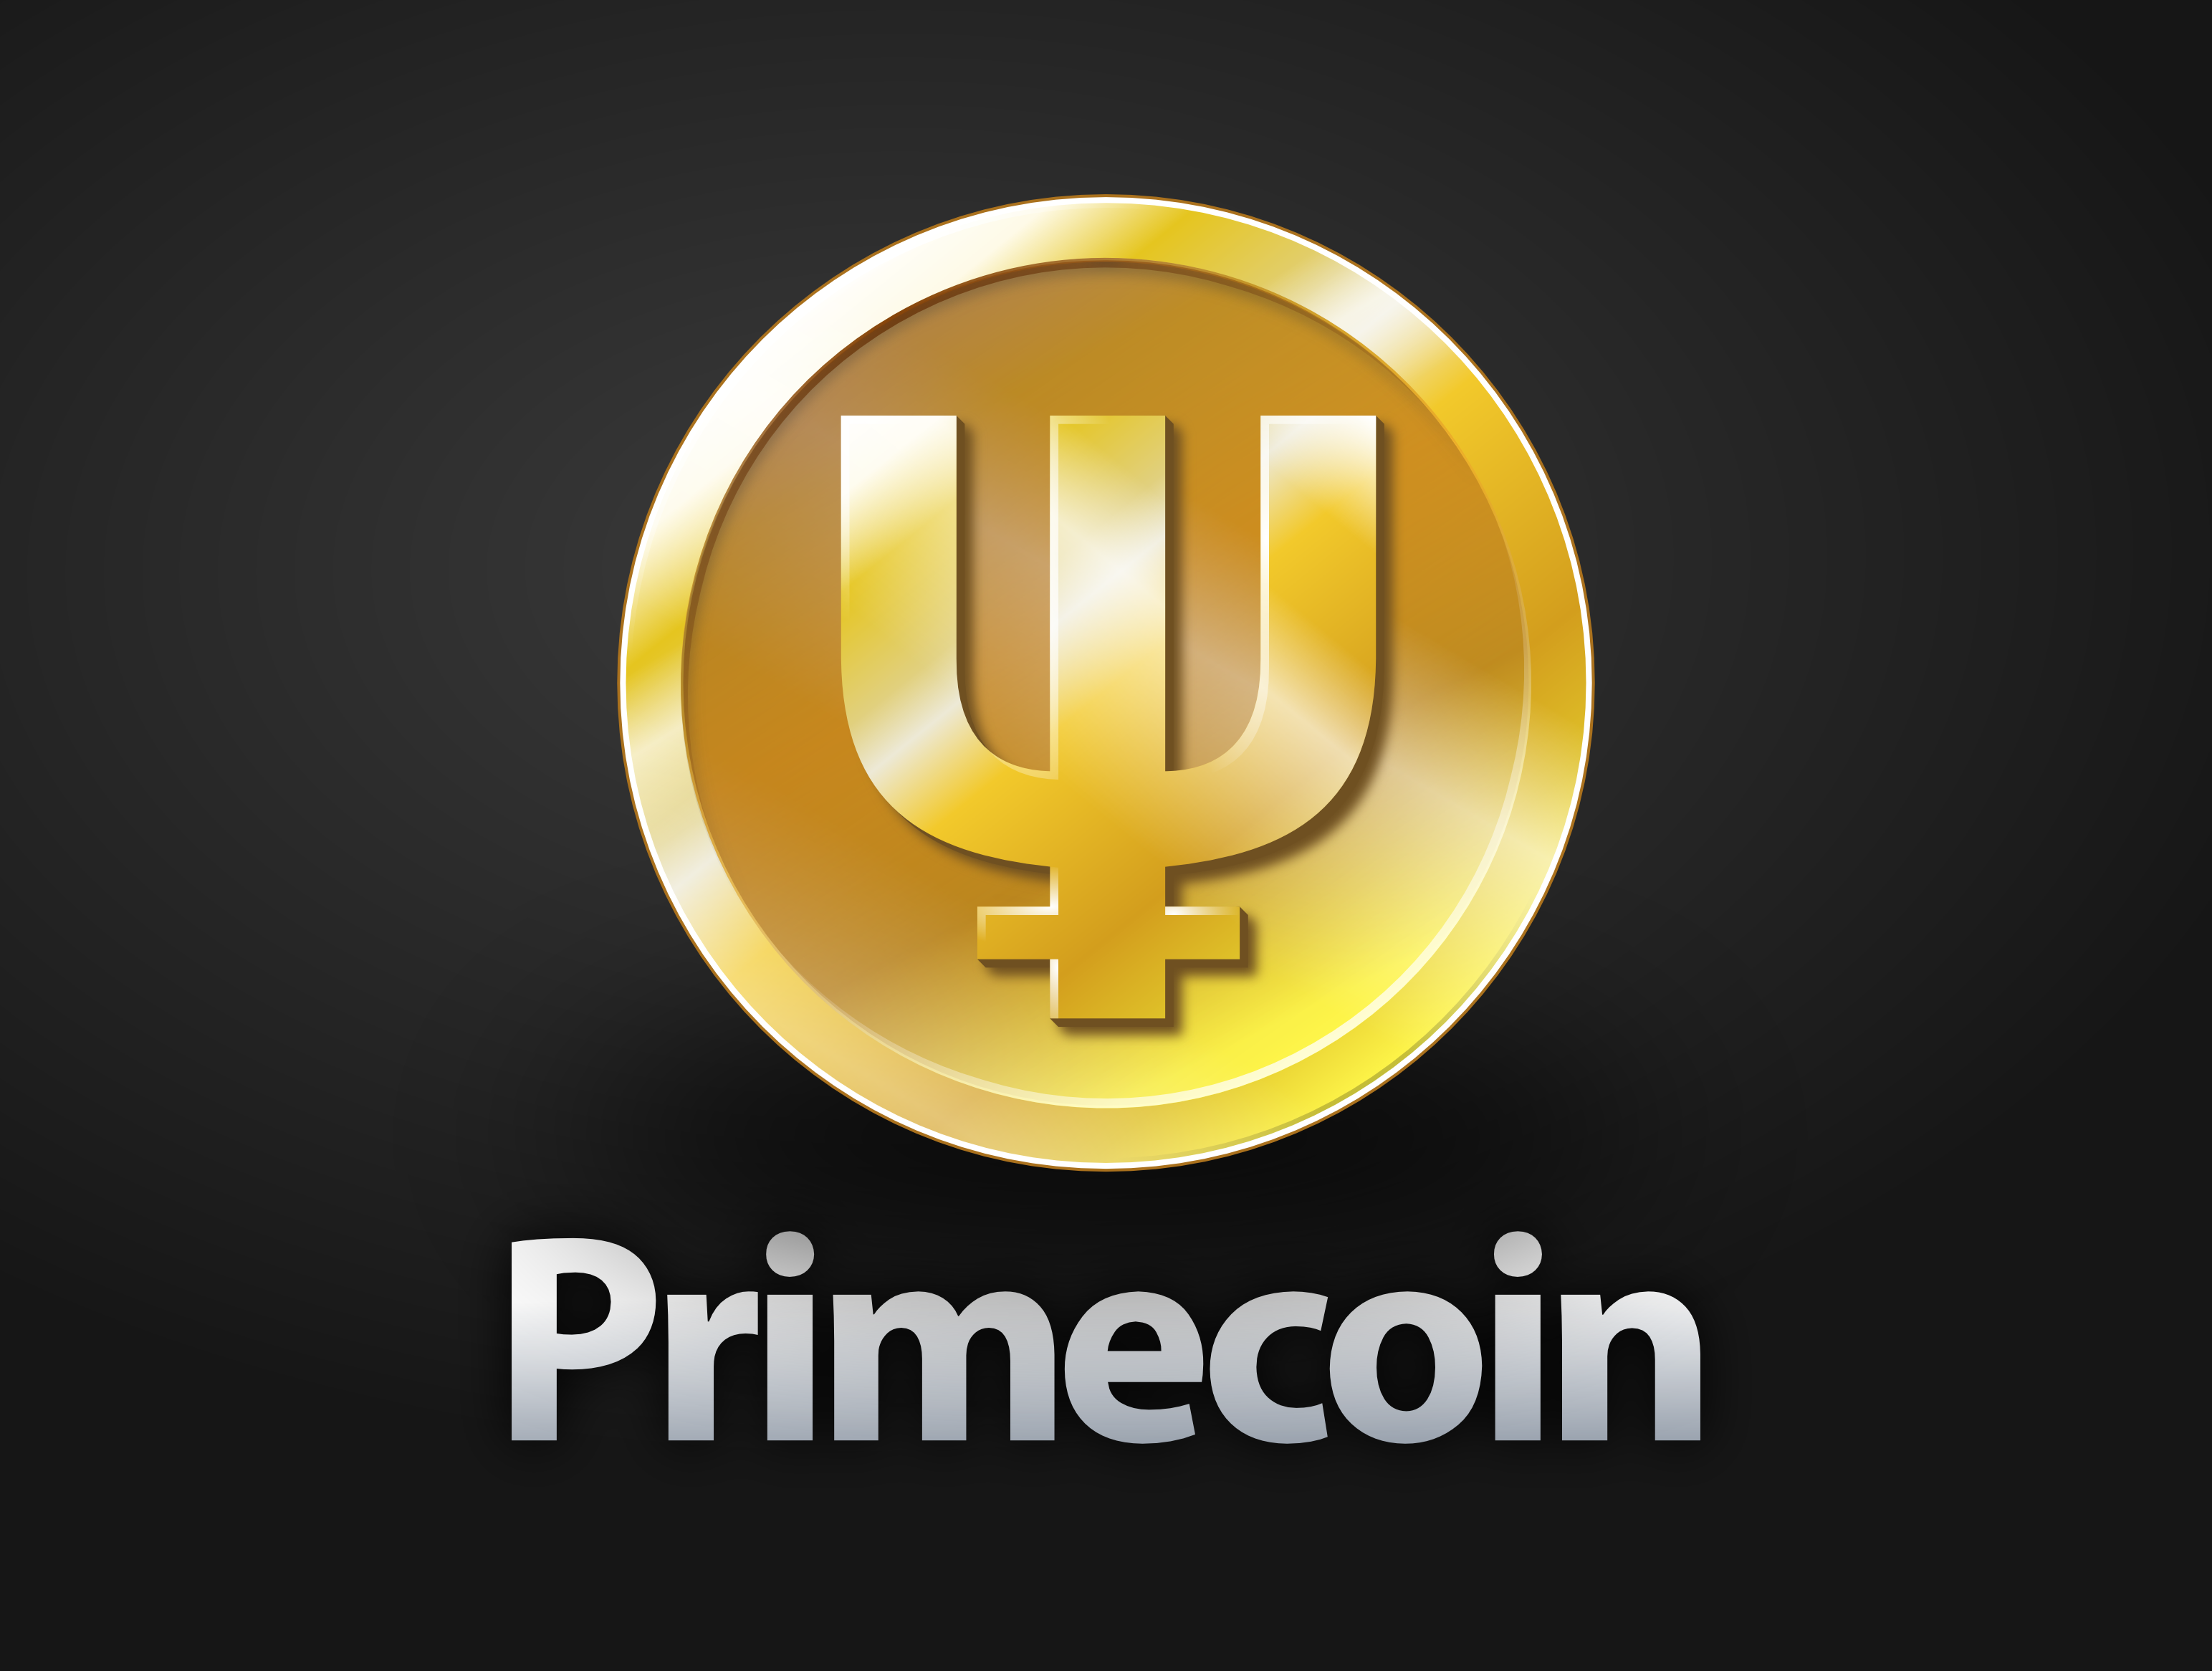 Primecoin price today, XPM to USD live price, marketcap and chart | CoinMarketCap